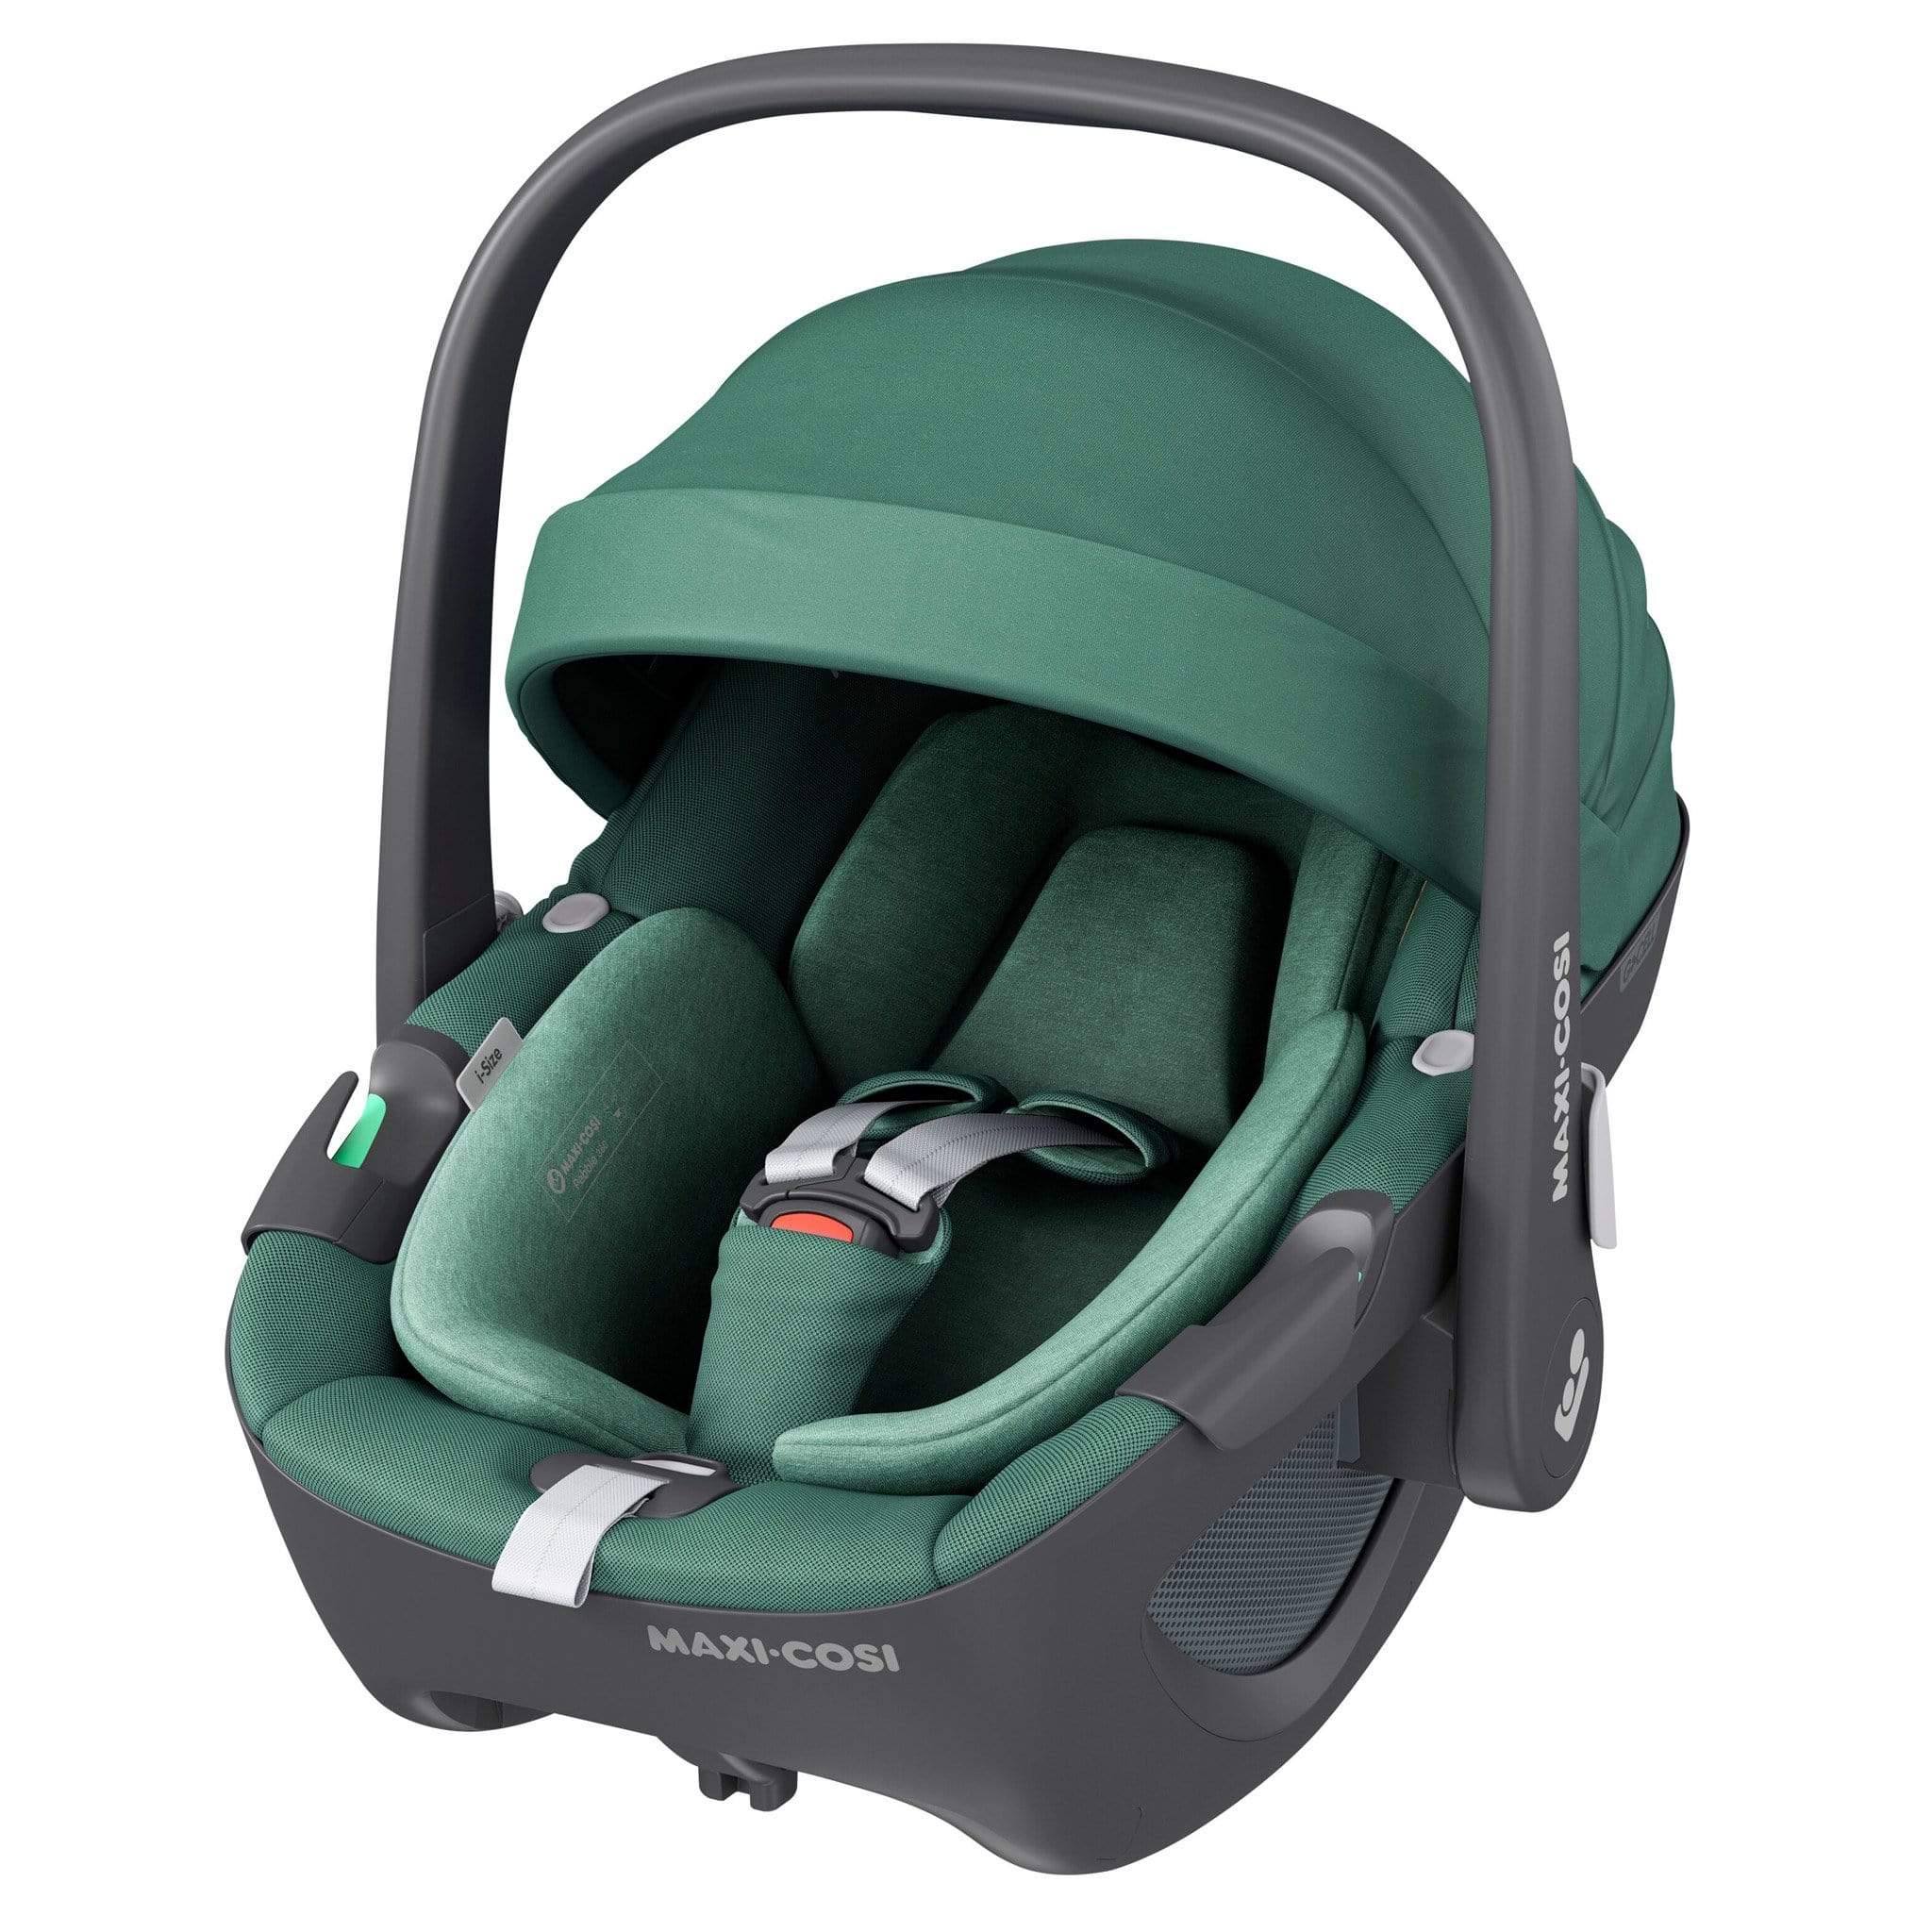 Maxi Cosi Pebble 360 Car Seat Essential Green i-Size Car Seats 8044047300 8712930170518